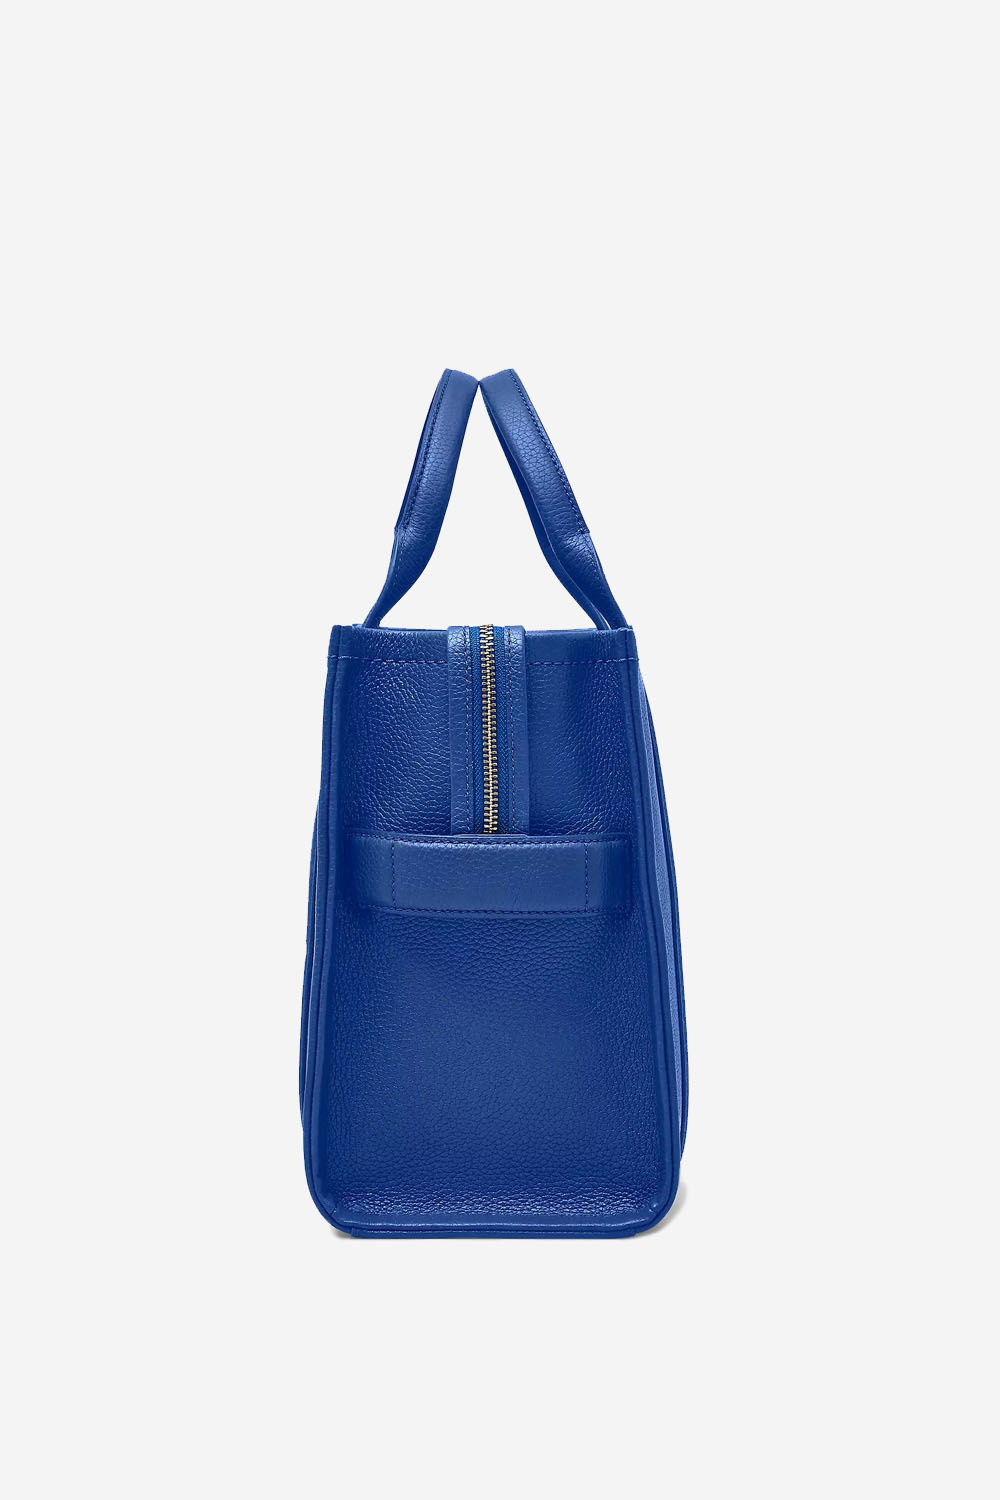 Marc Jacobs Tote bag Blue